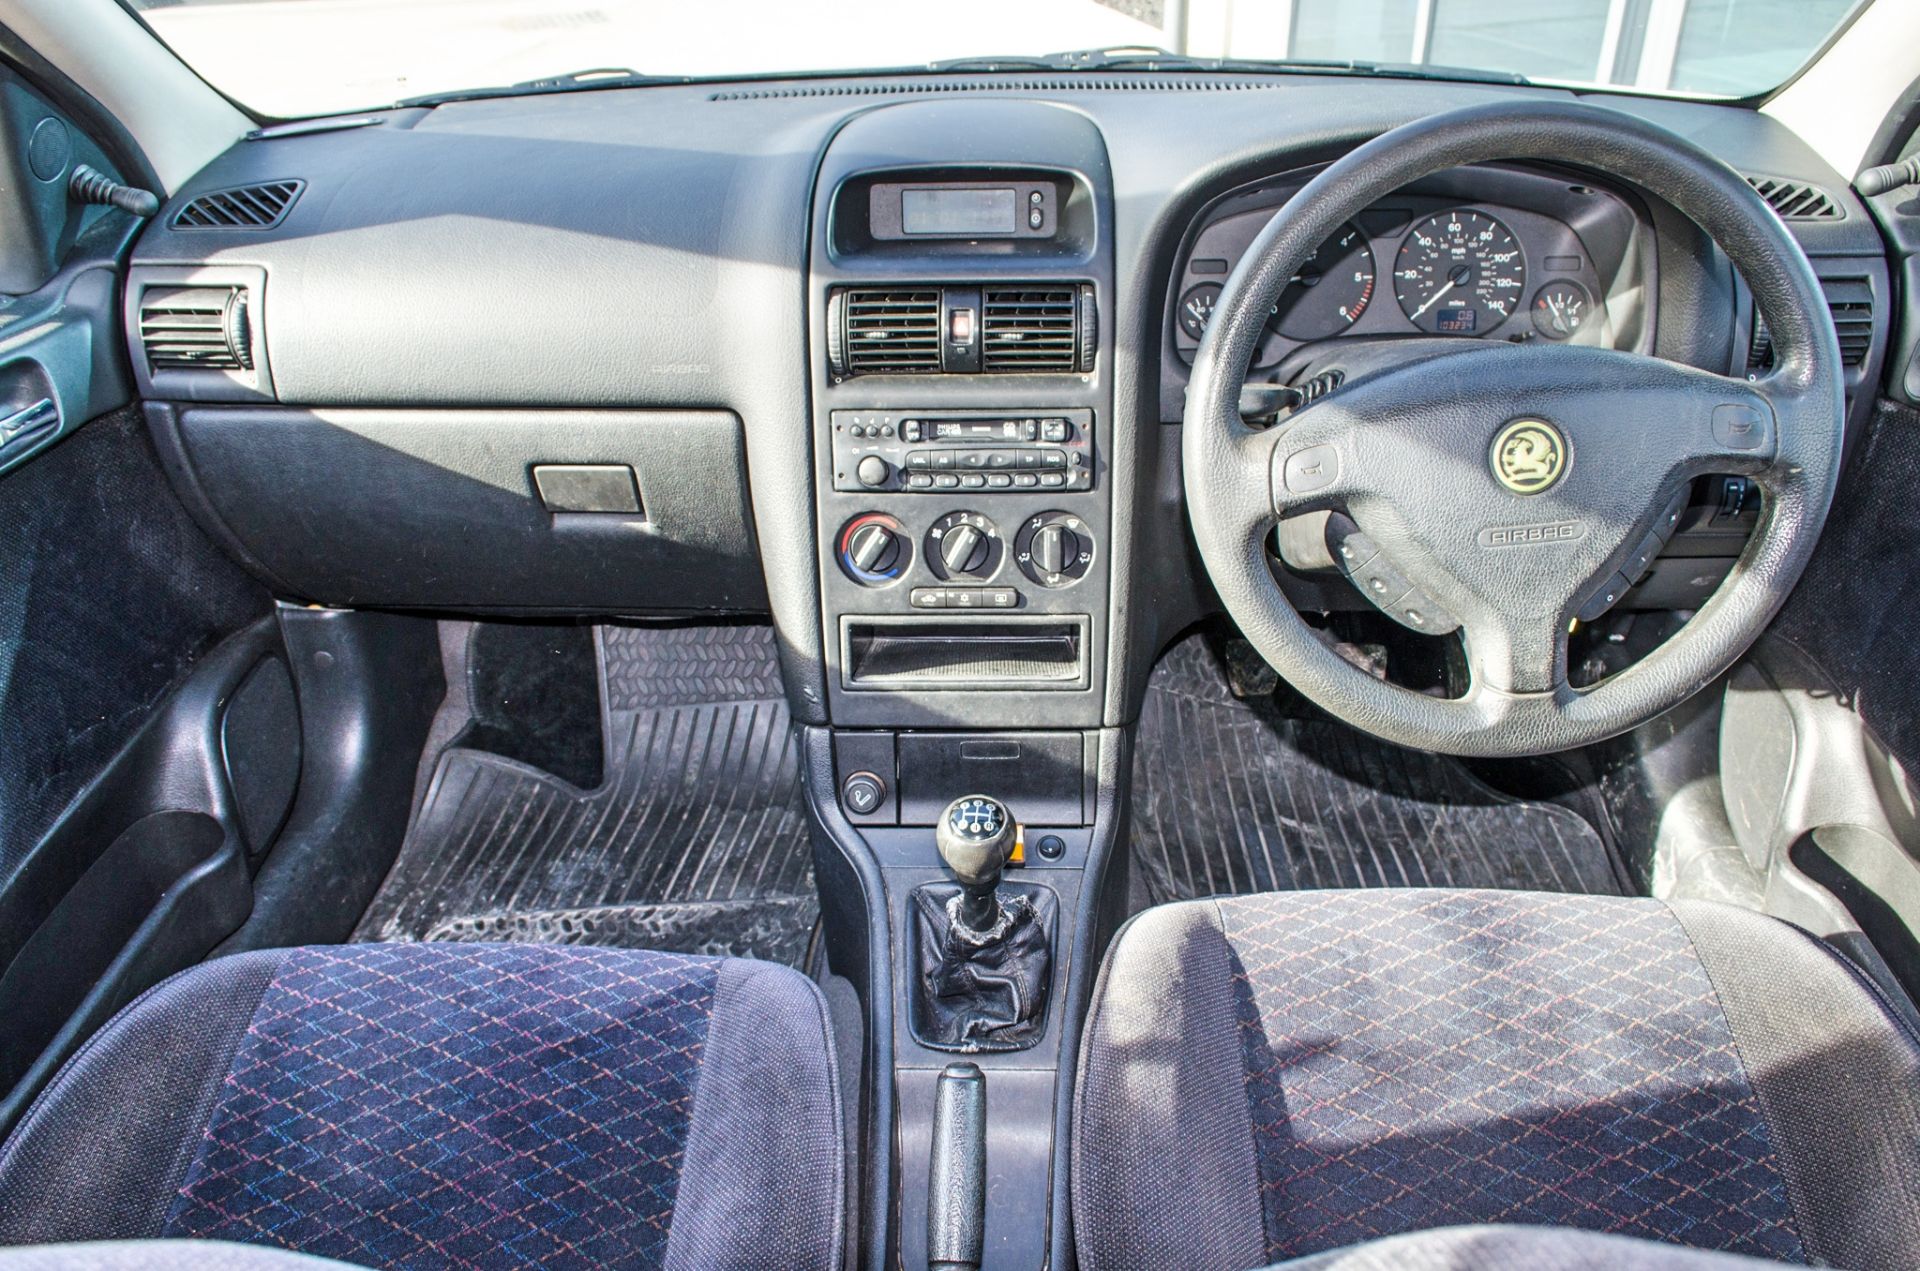 1999 Vauxhall Astra LS DI 16V 1995cc 5 door hatchback - Image 42 of 55